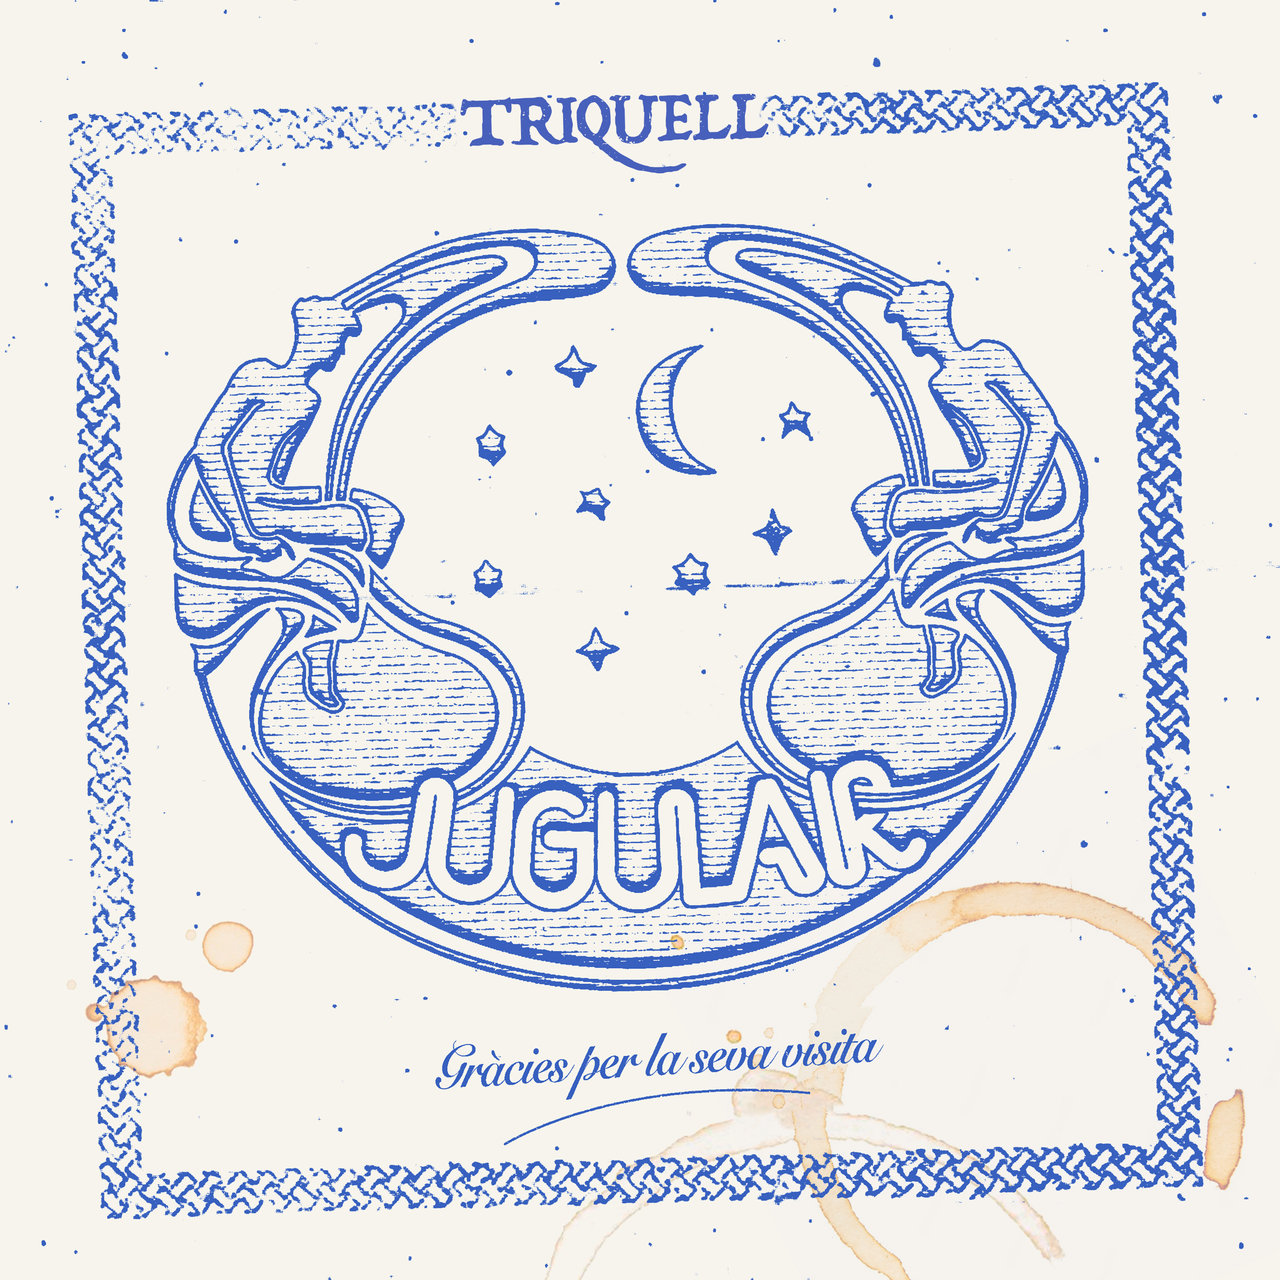 Triquell — Jugular cover artwork